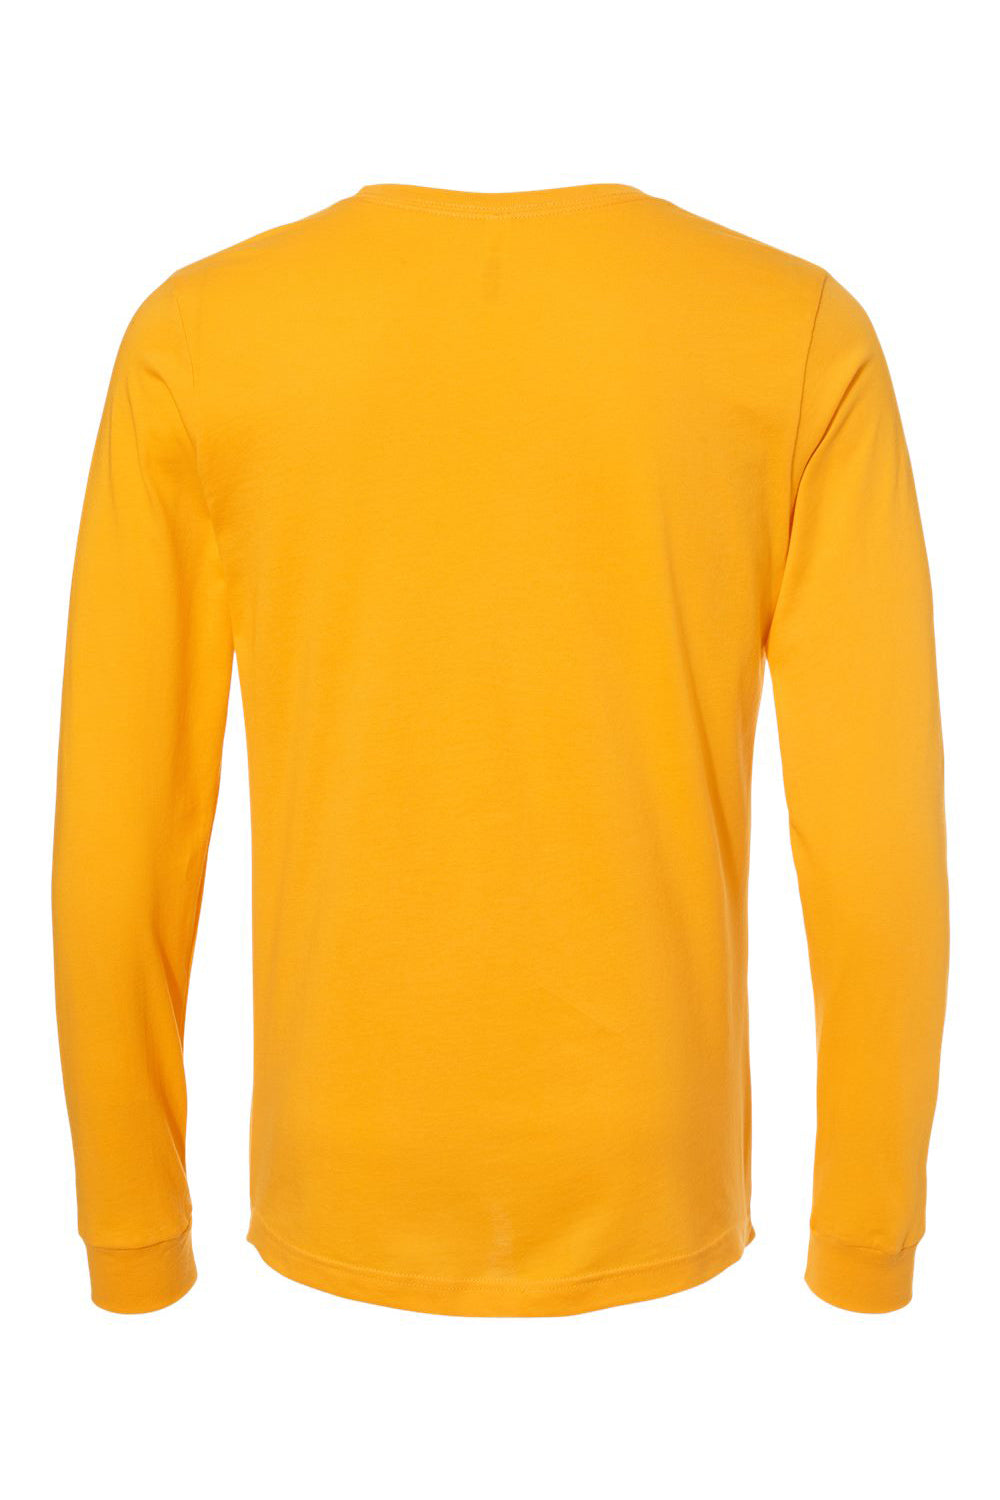 Bella + Canvas BC3501/3501 Mens Jersey Long Sleeve Crewneck T-Shirt Gold Flat Back